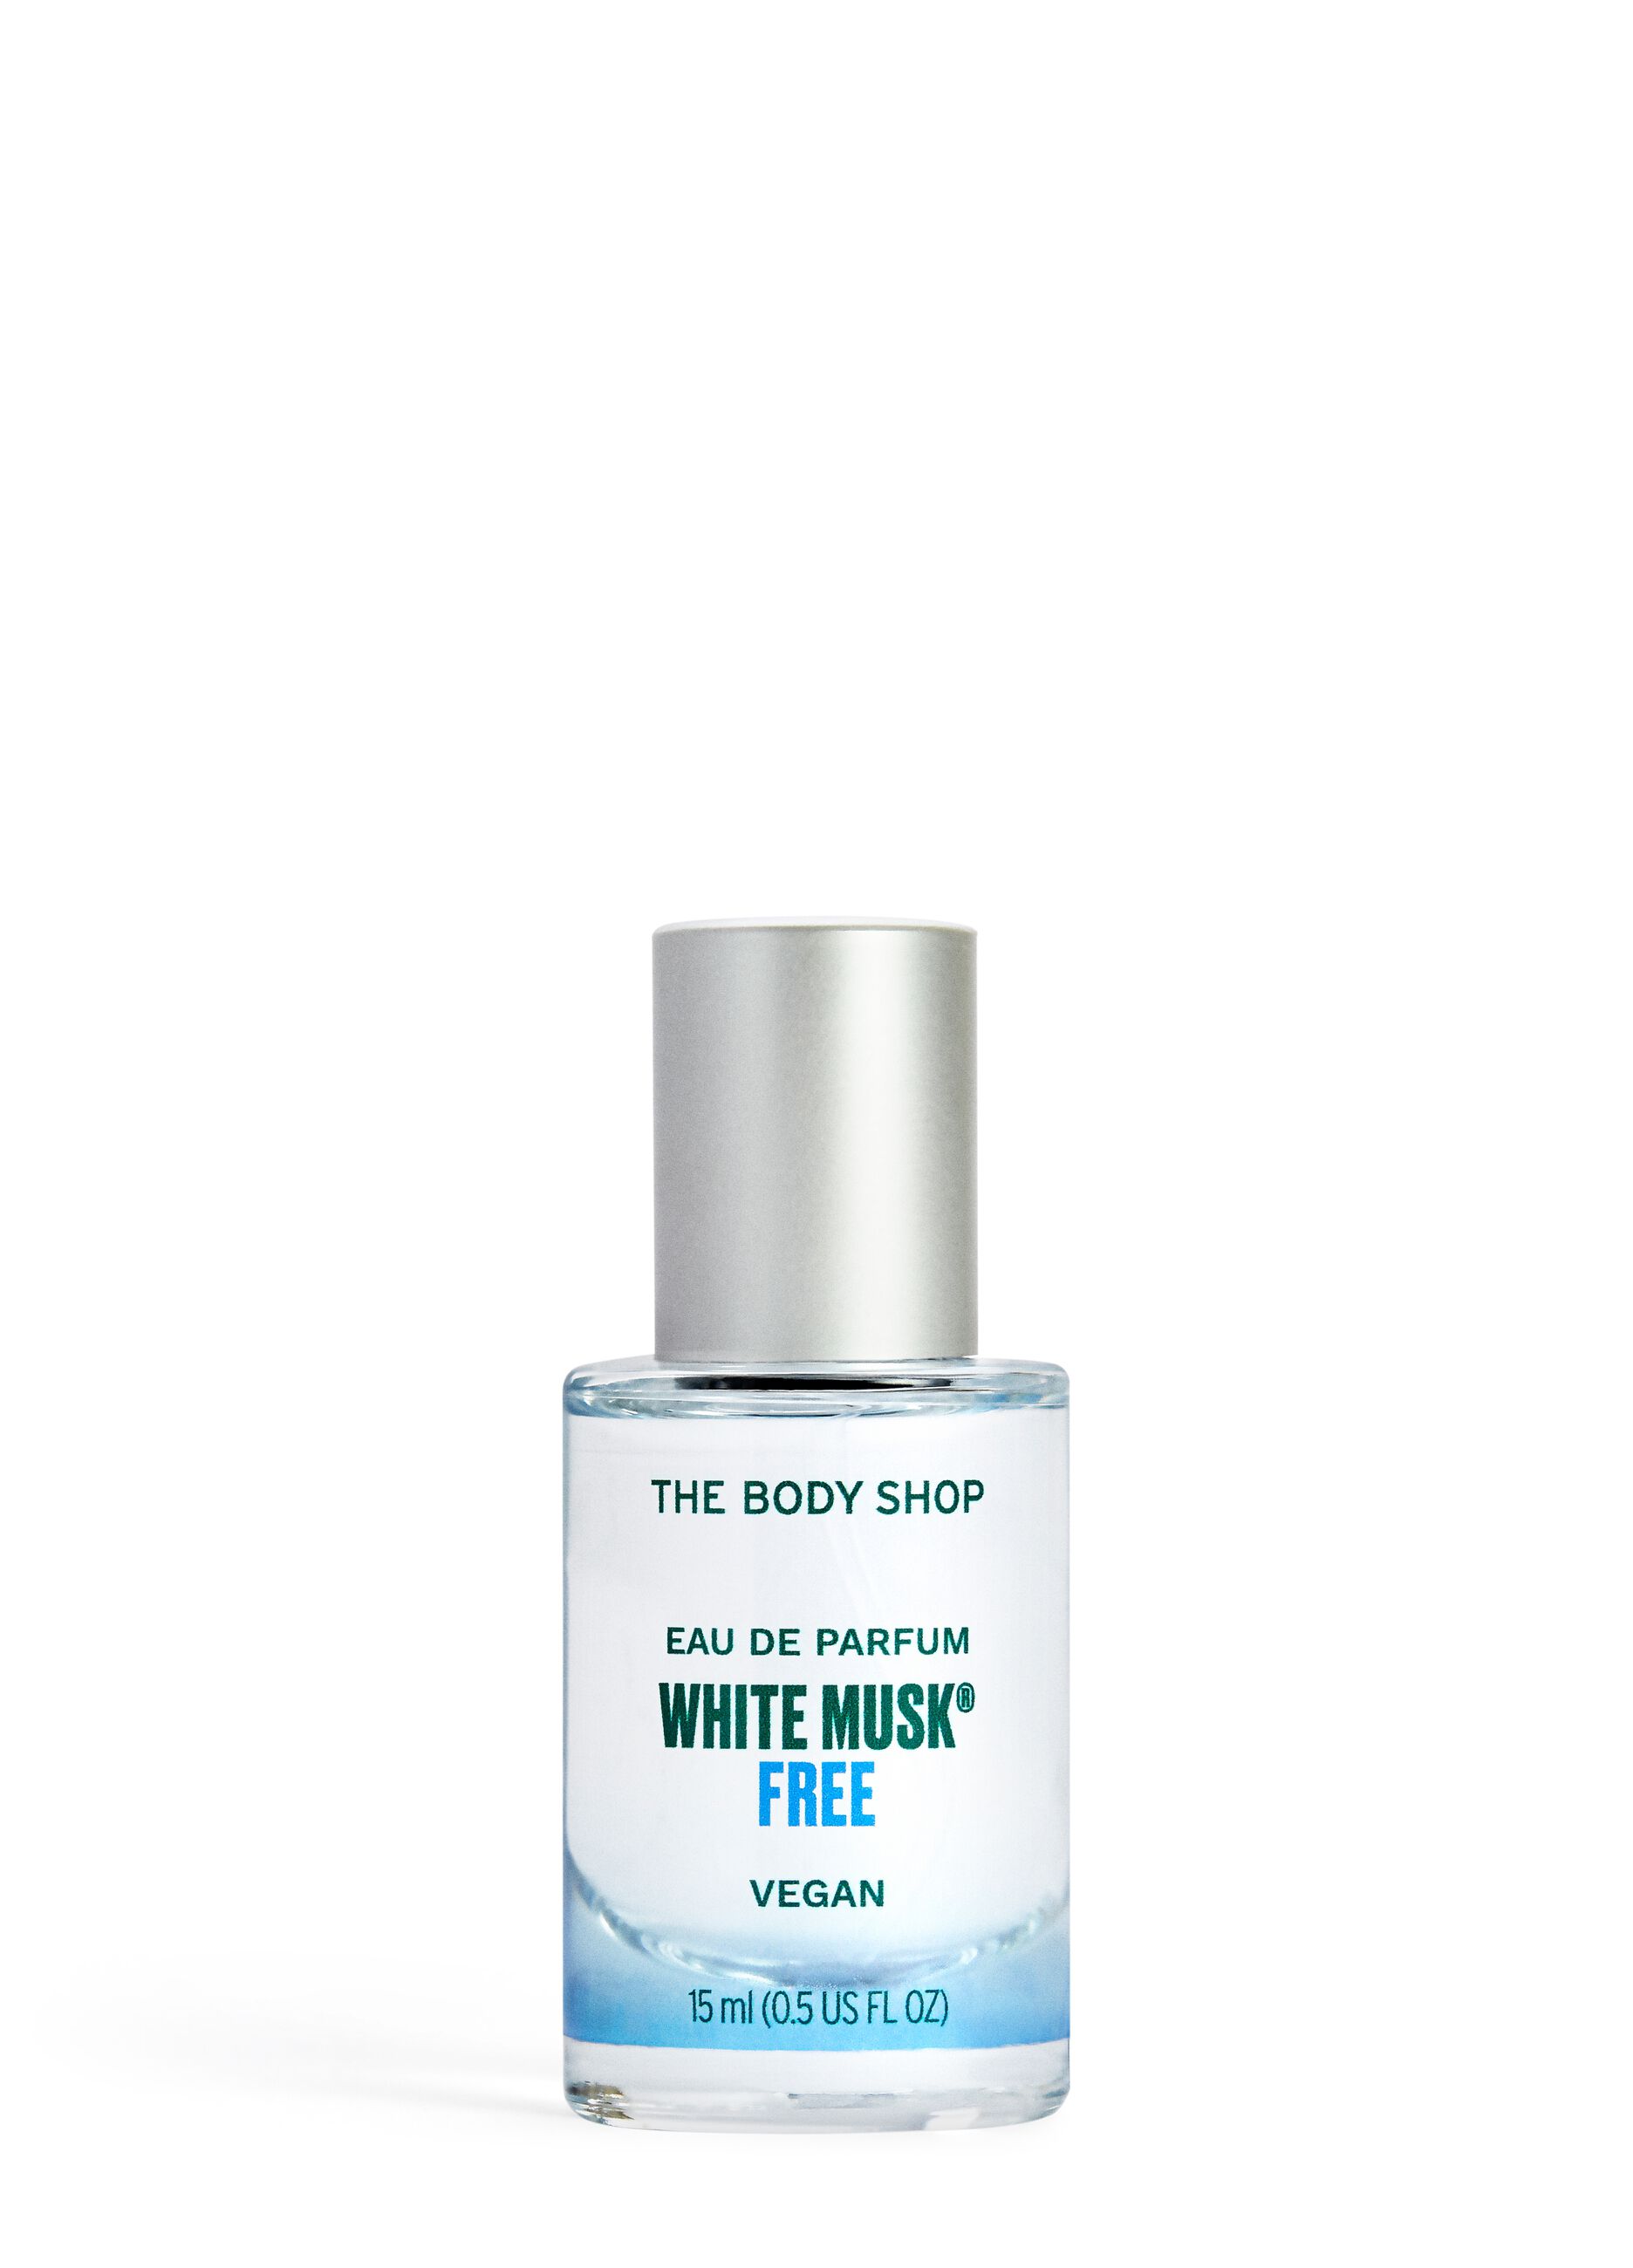 The Body Shop White Musk® Free Eau de Parfum 15ml